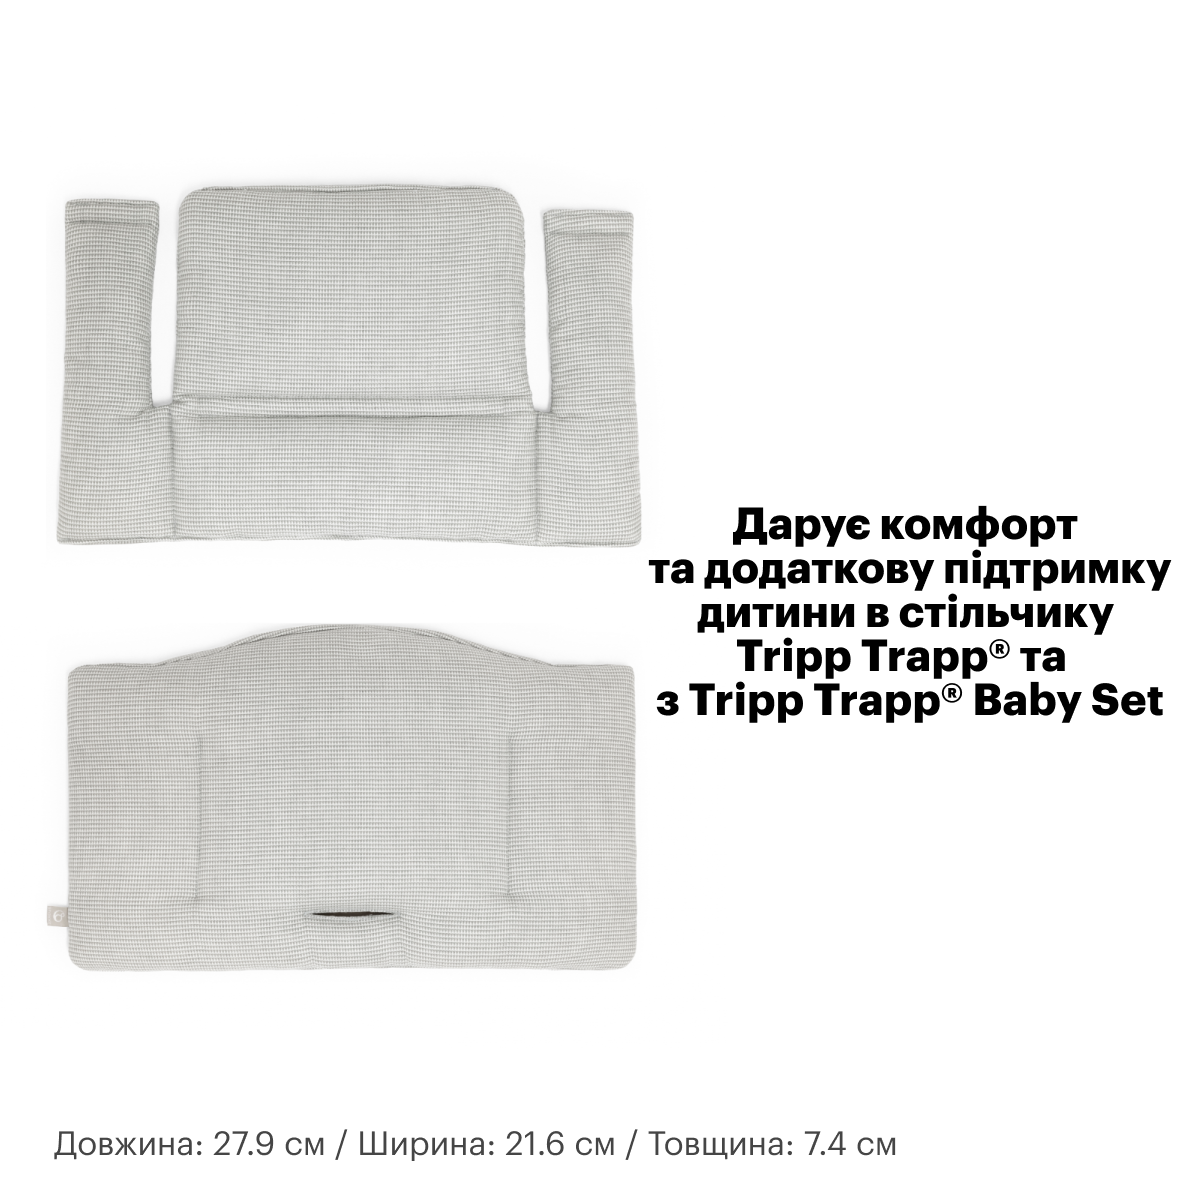 Текстиль для стульчика Stokke Tripp Trapp Star silver (100370) - фото 5